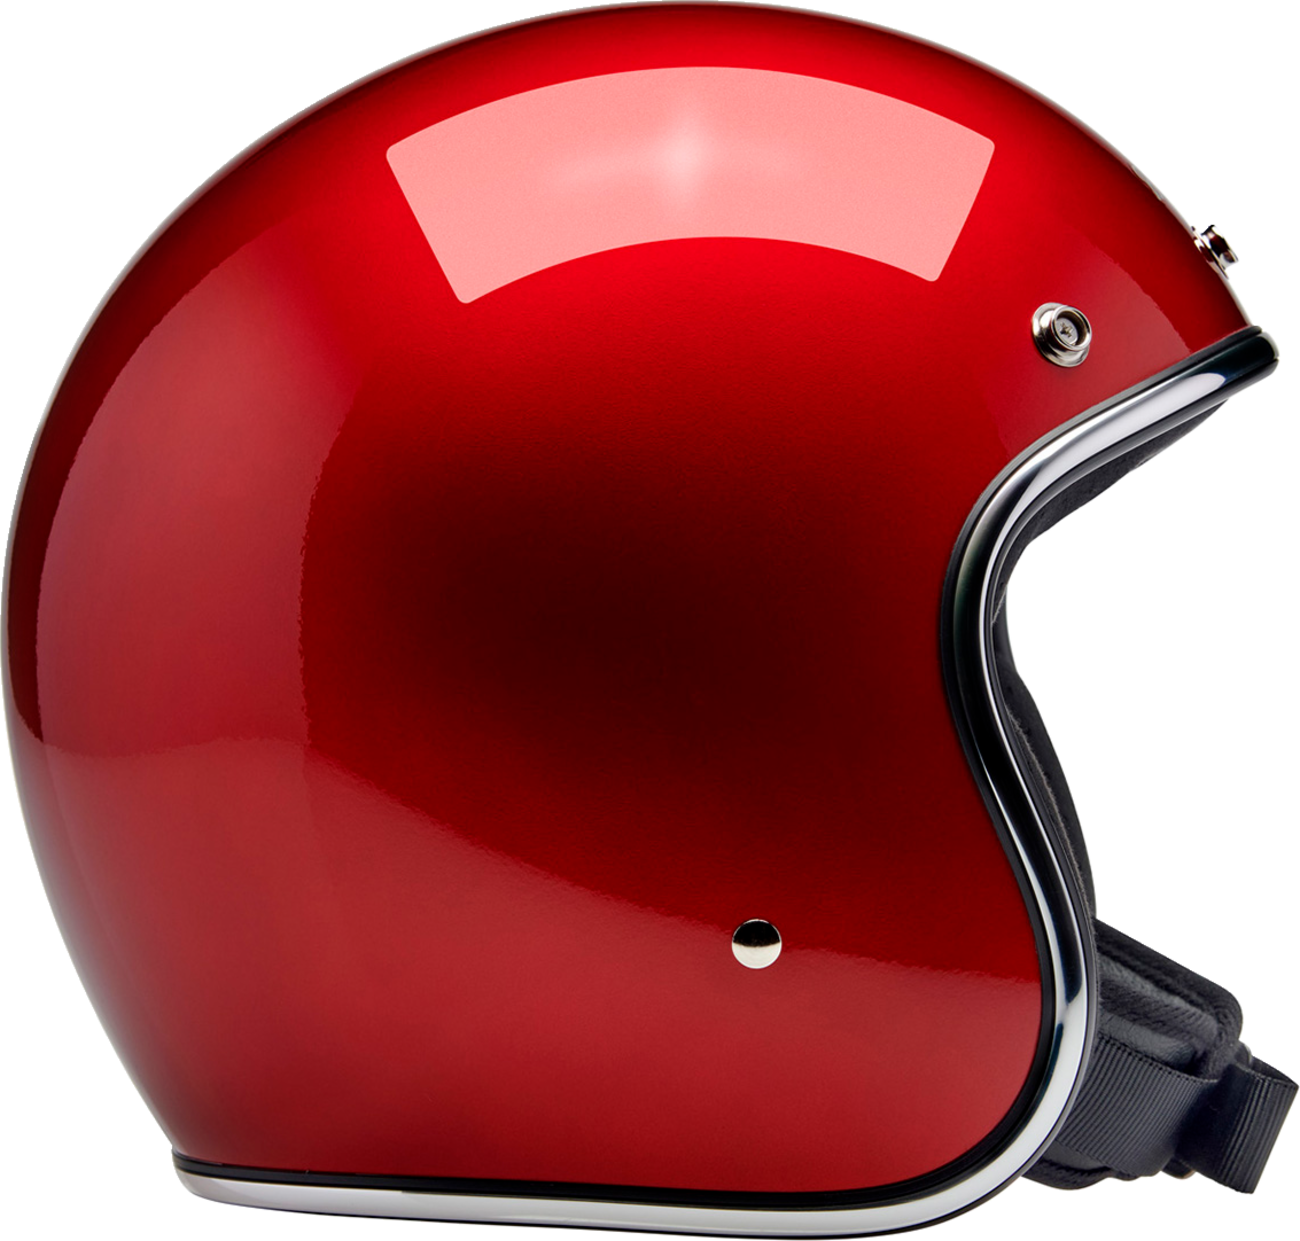 BILTWELL Bonanza Helmet - Metallic Cherry Red - Large 1001-351-204